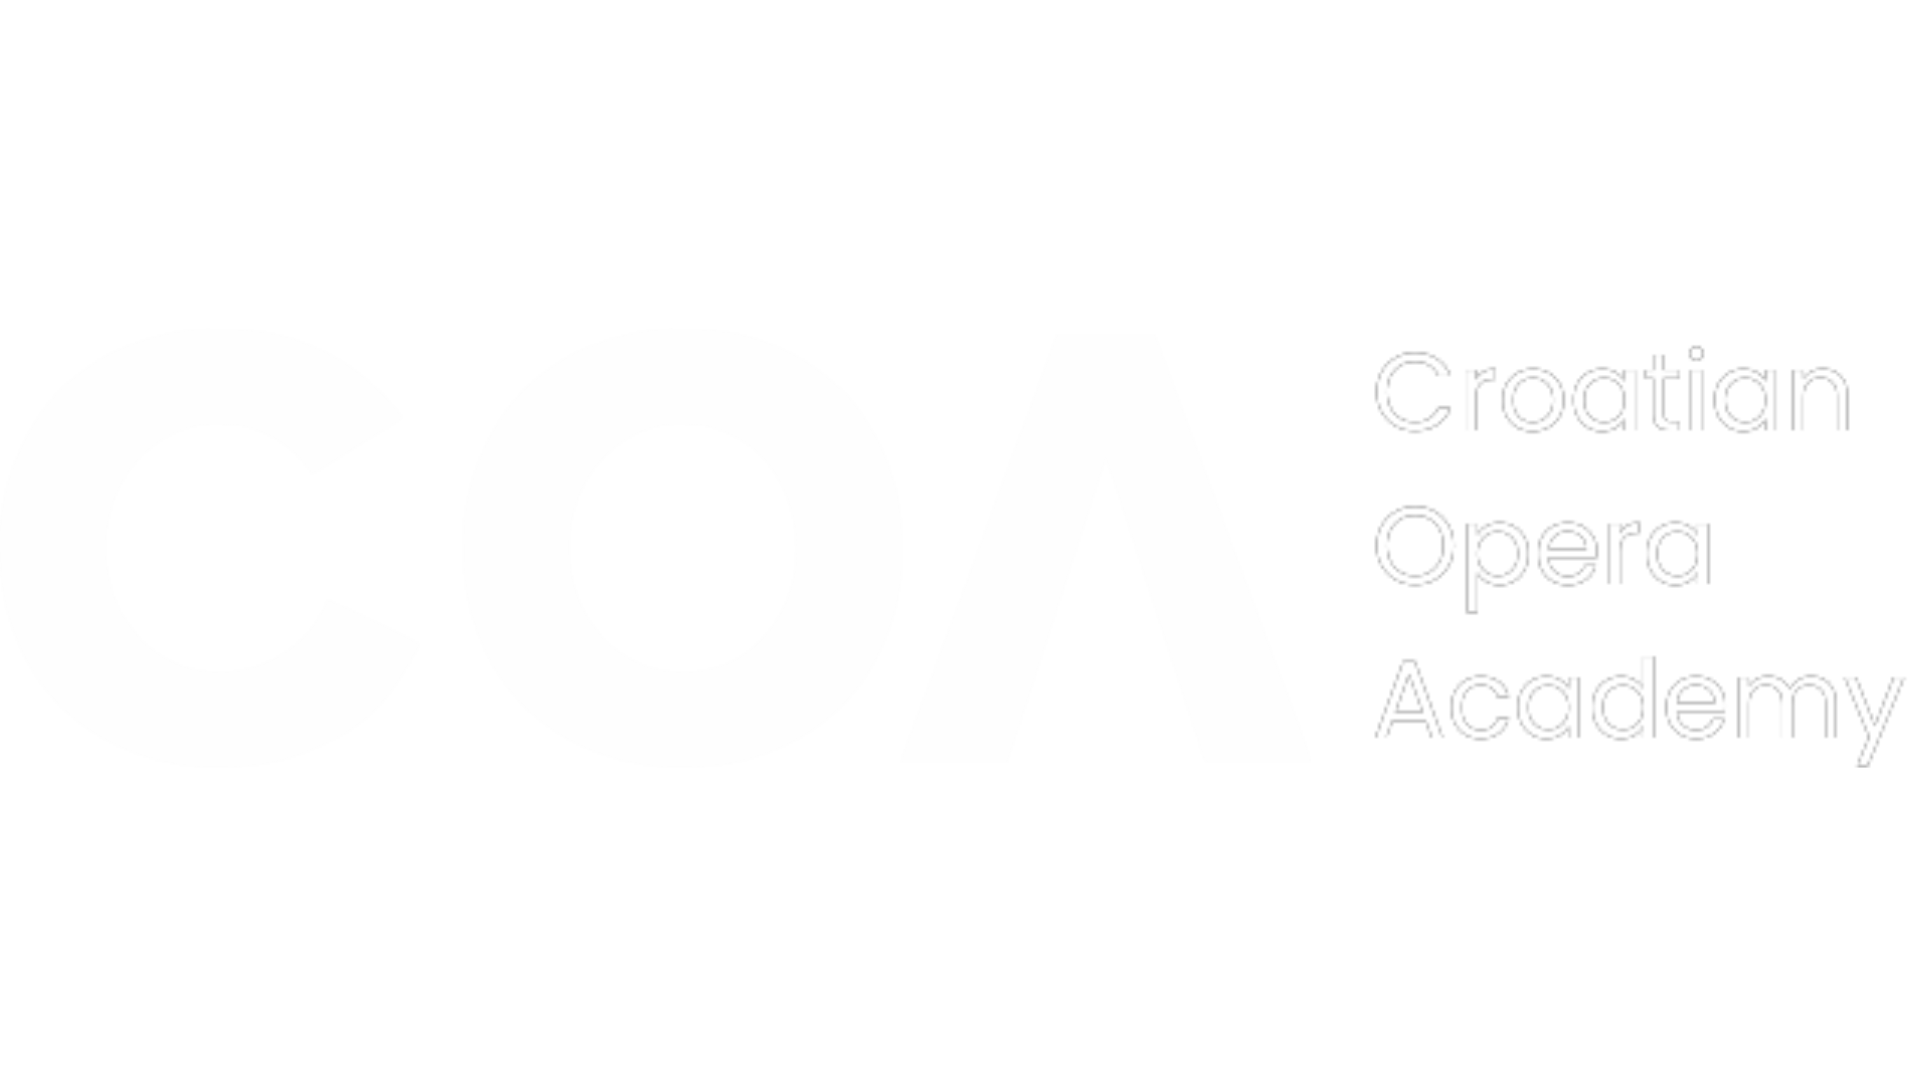 Croatian opera academy logo